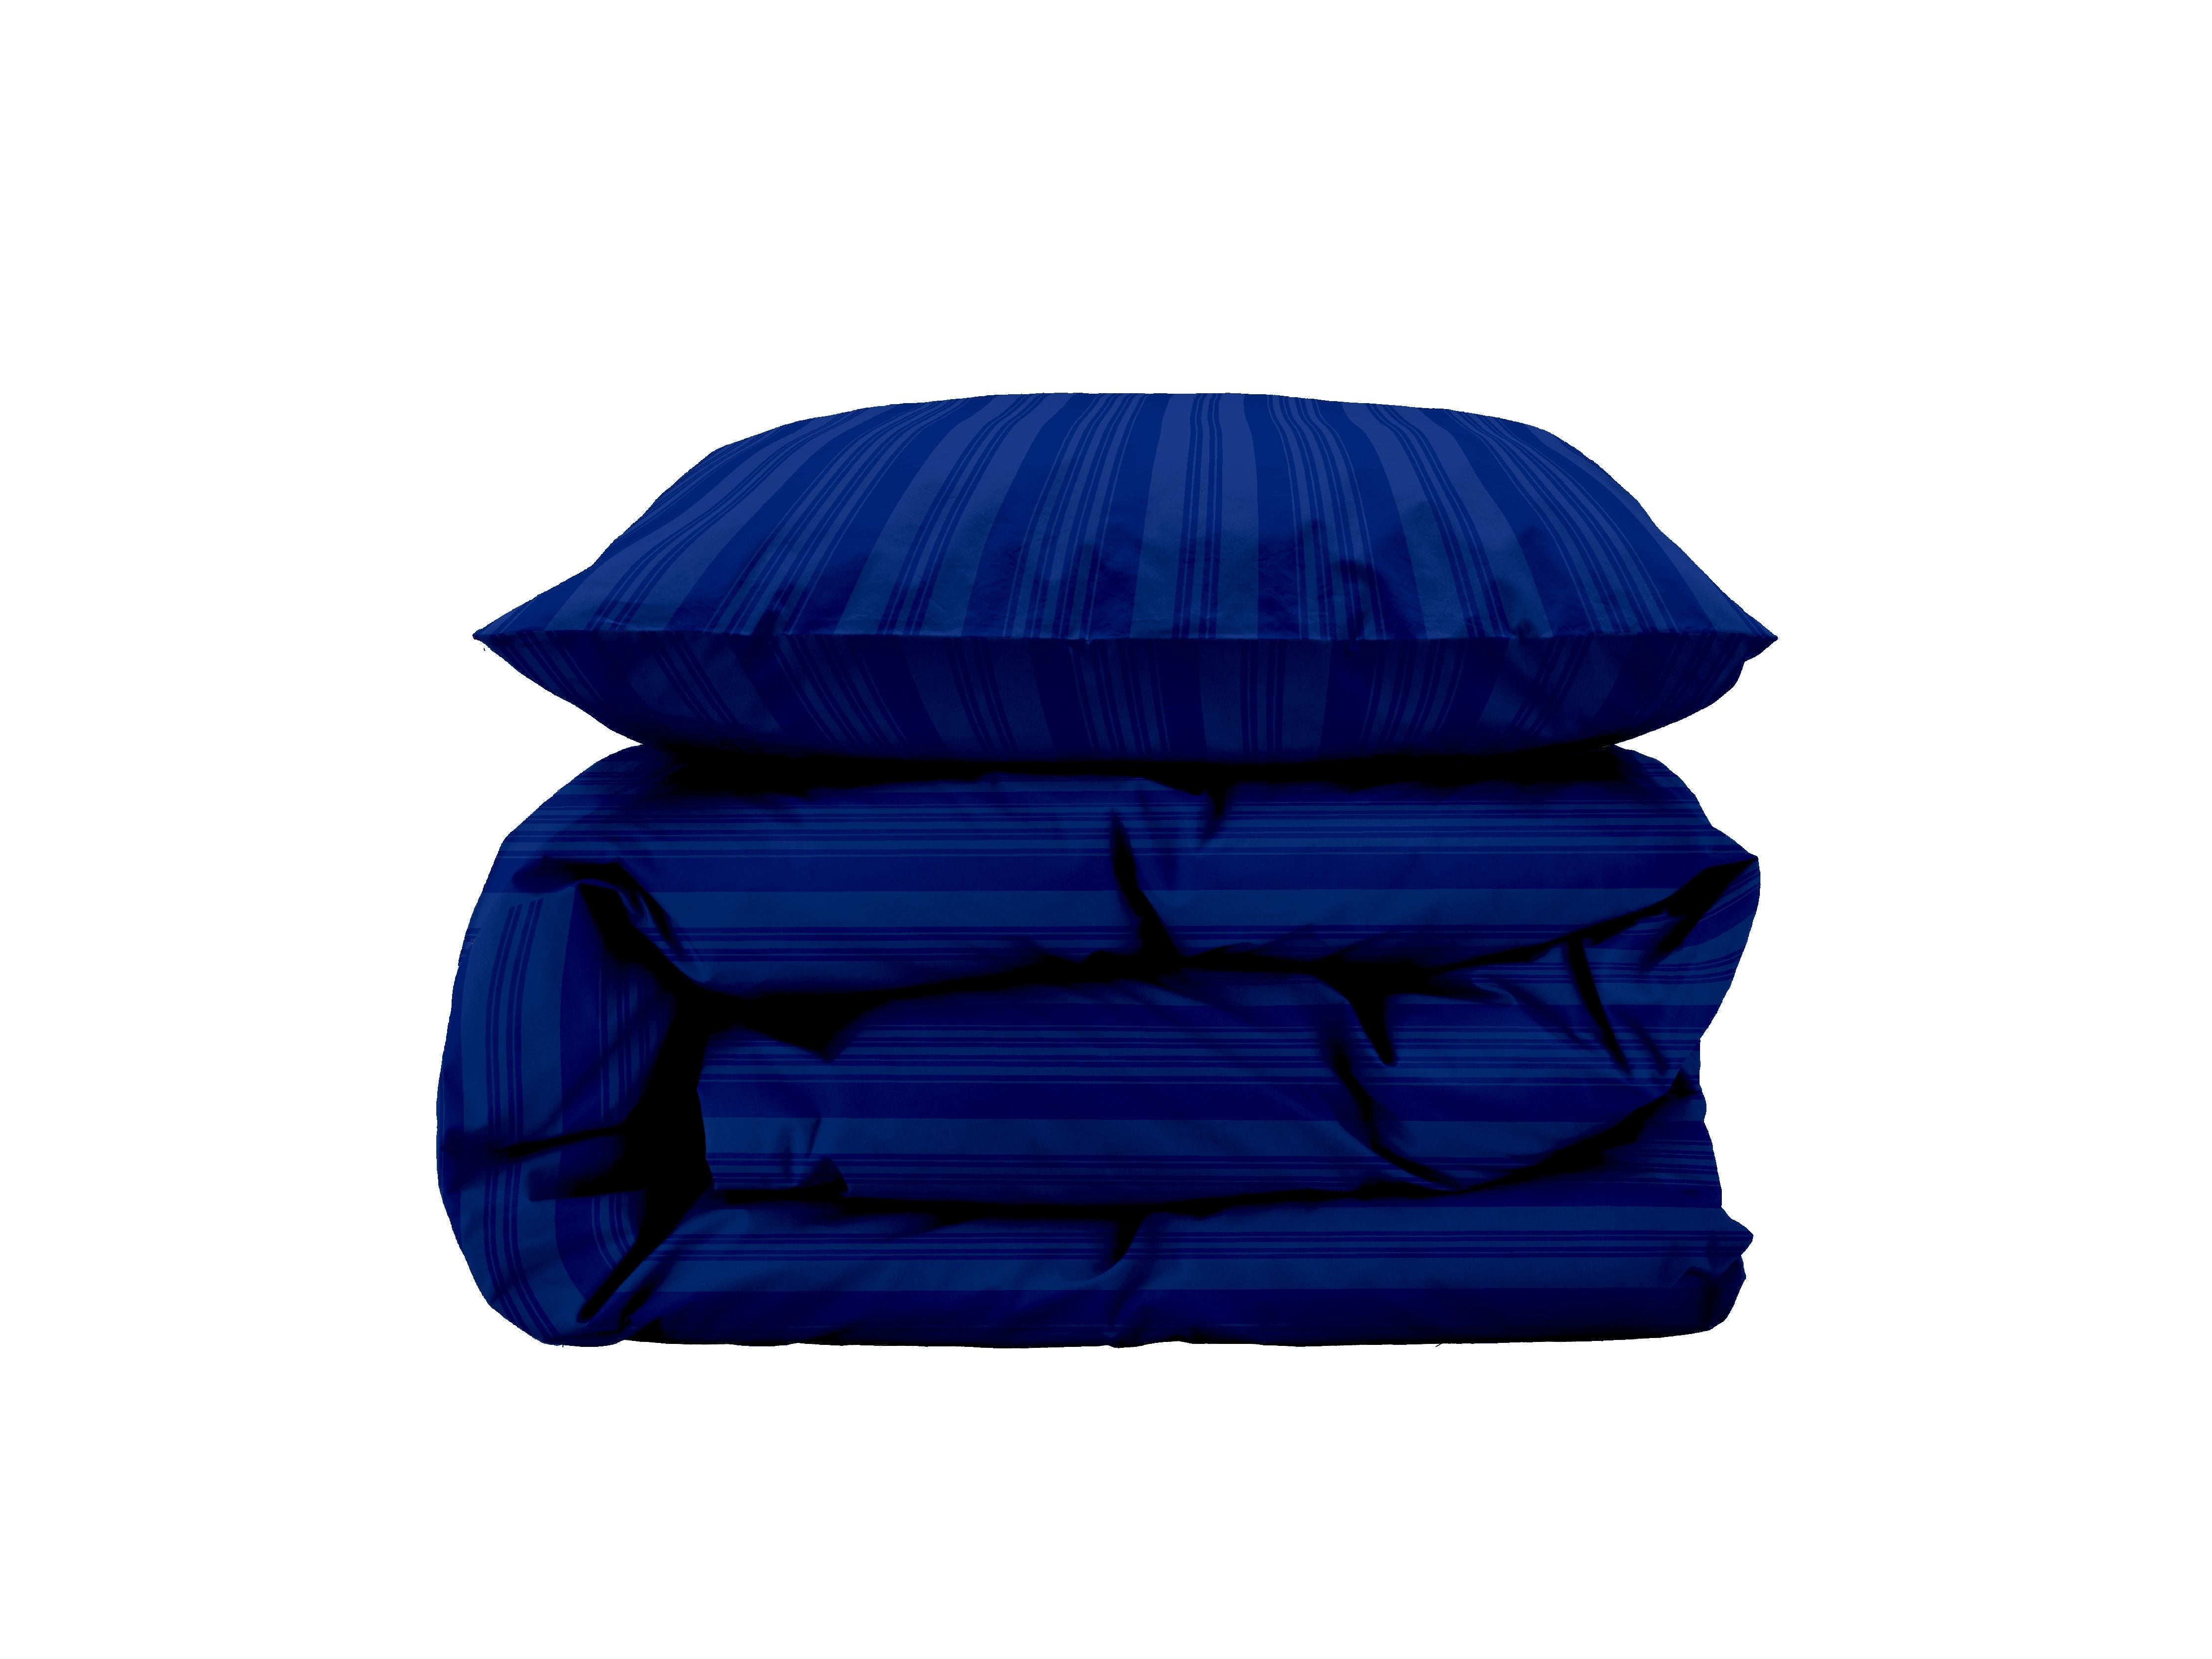 Södahl noble cama lino 140 x 200 cm, azul real